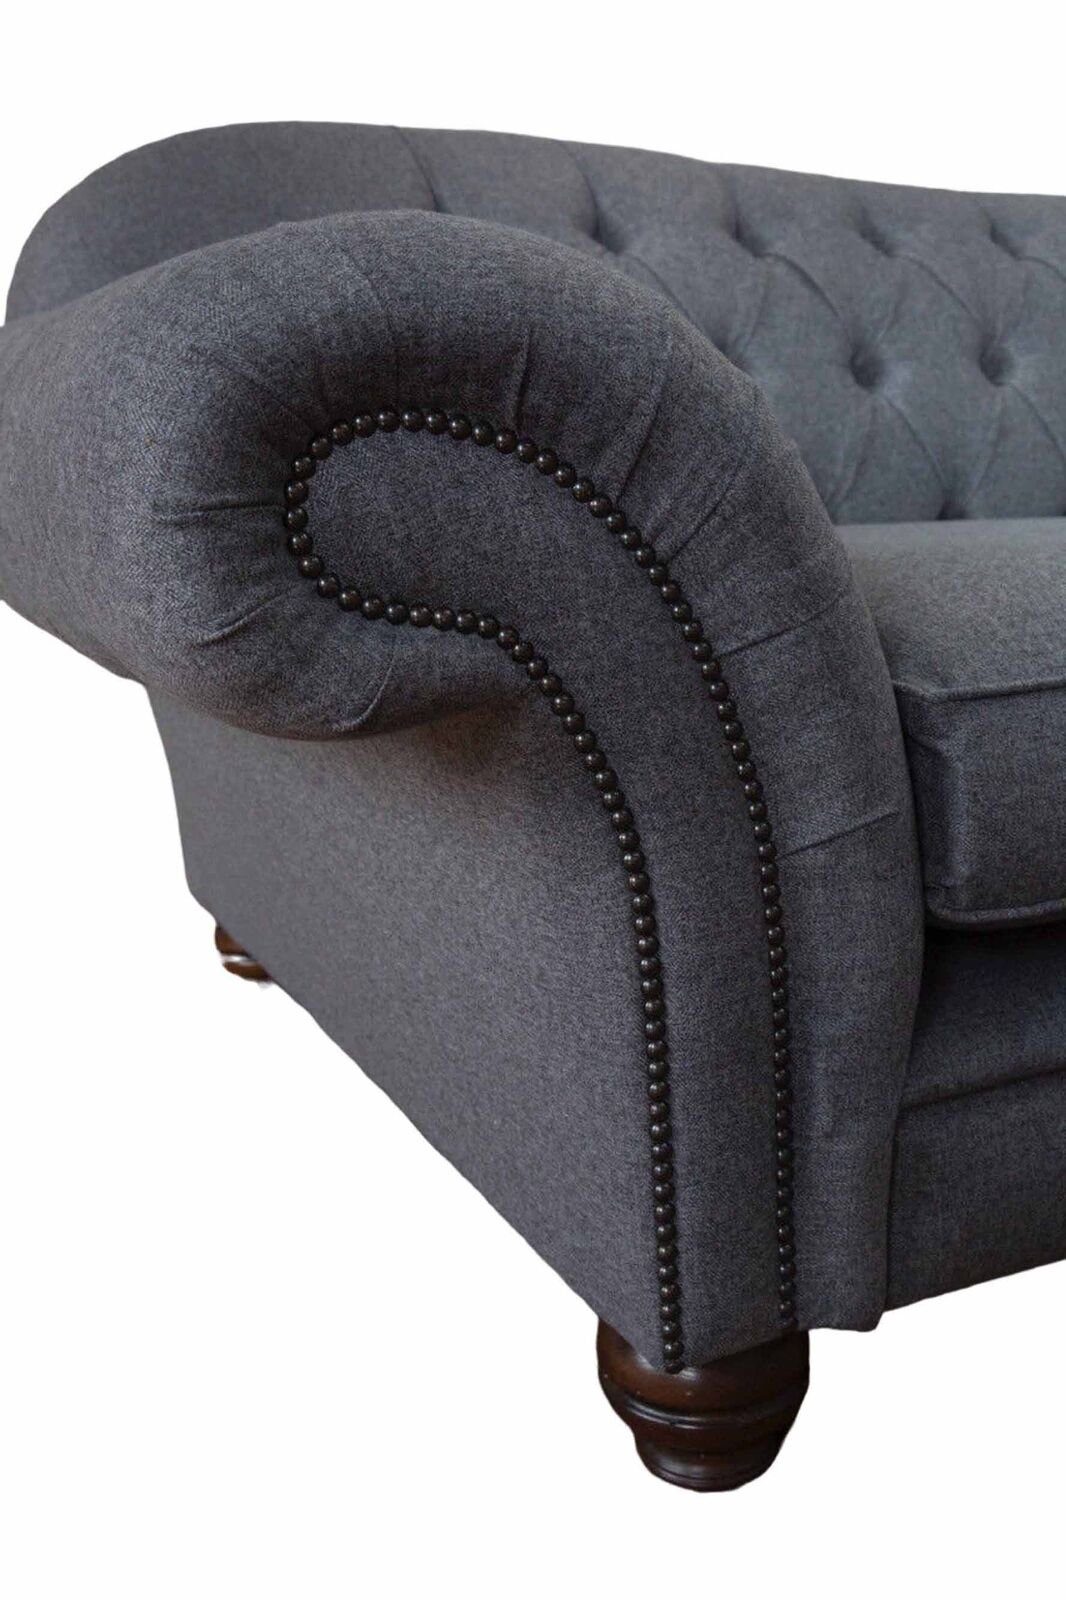 JVmoebel Sofa Sitzer Europe Sofas Polster Neu, Grau Stoff Luxus Textil 3 Made Modernes Sofa Couch in